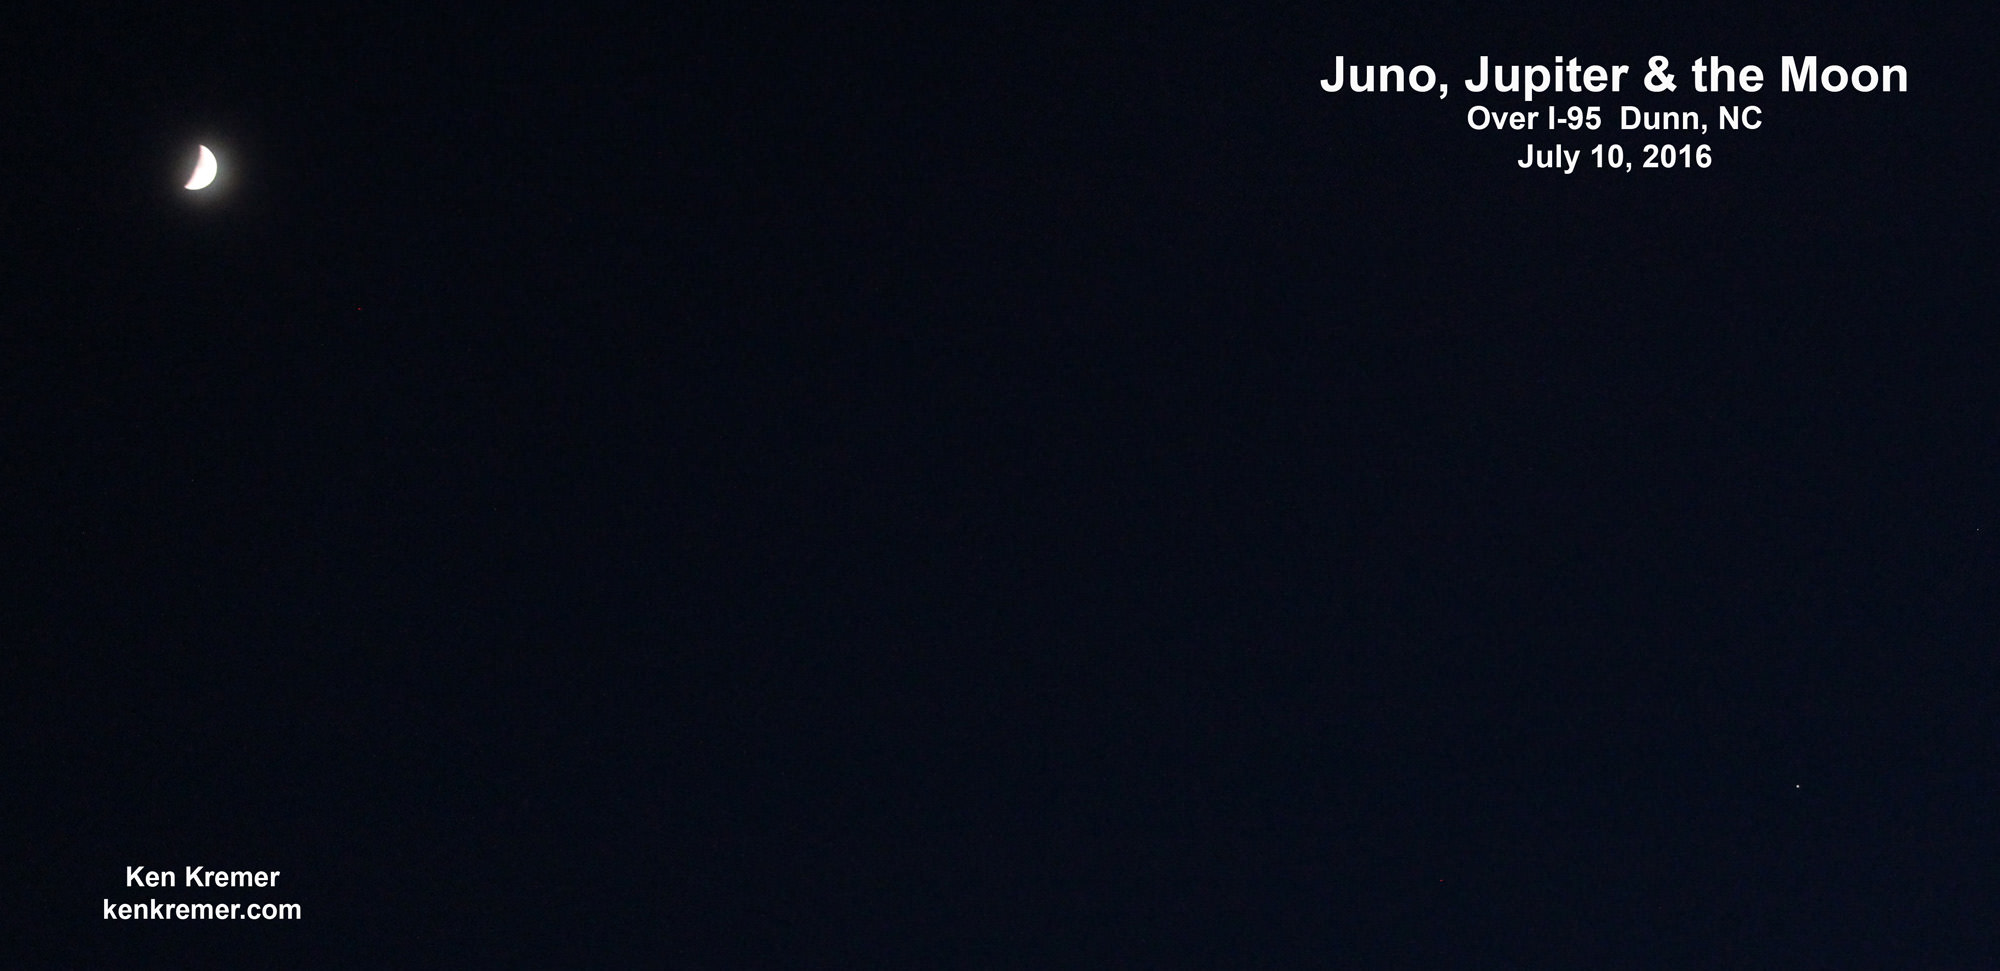 Juno, Jupiter and the Moon as seen from I-95 over Dunn, NC on July 10, 2016. Credit: Ken Kremer/kenkremer.com